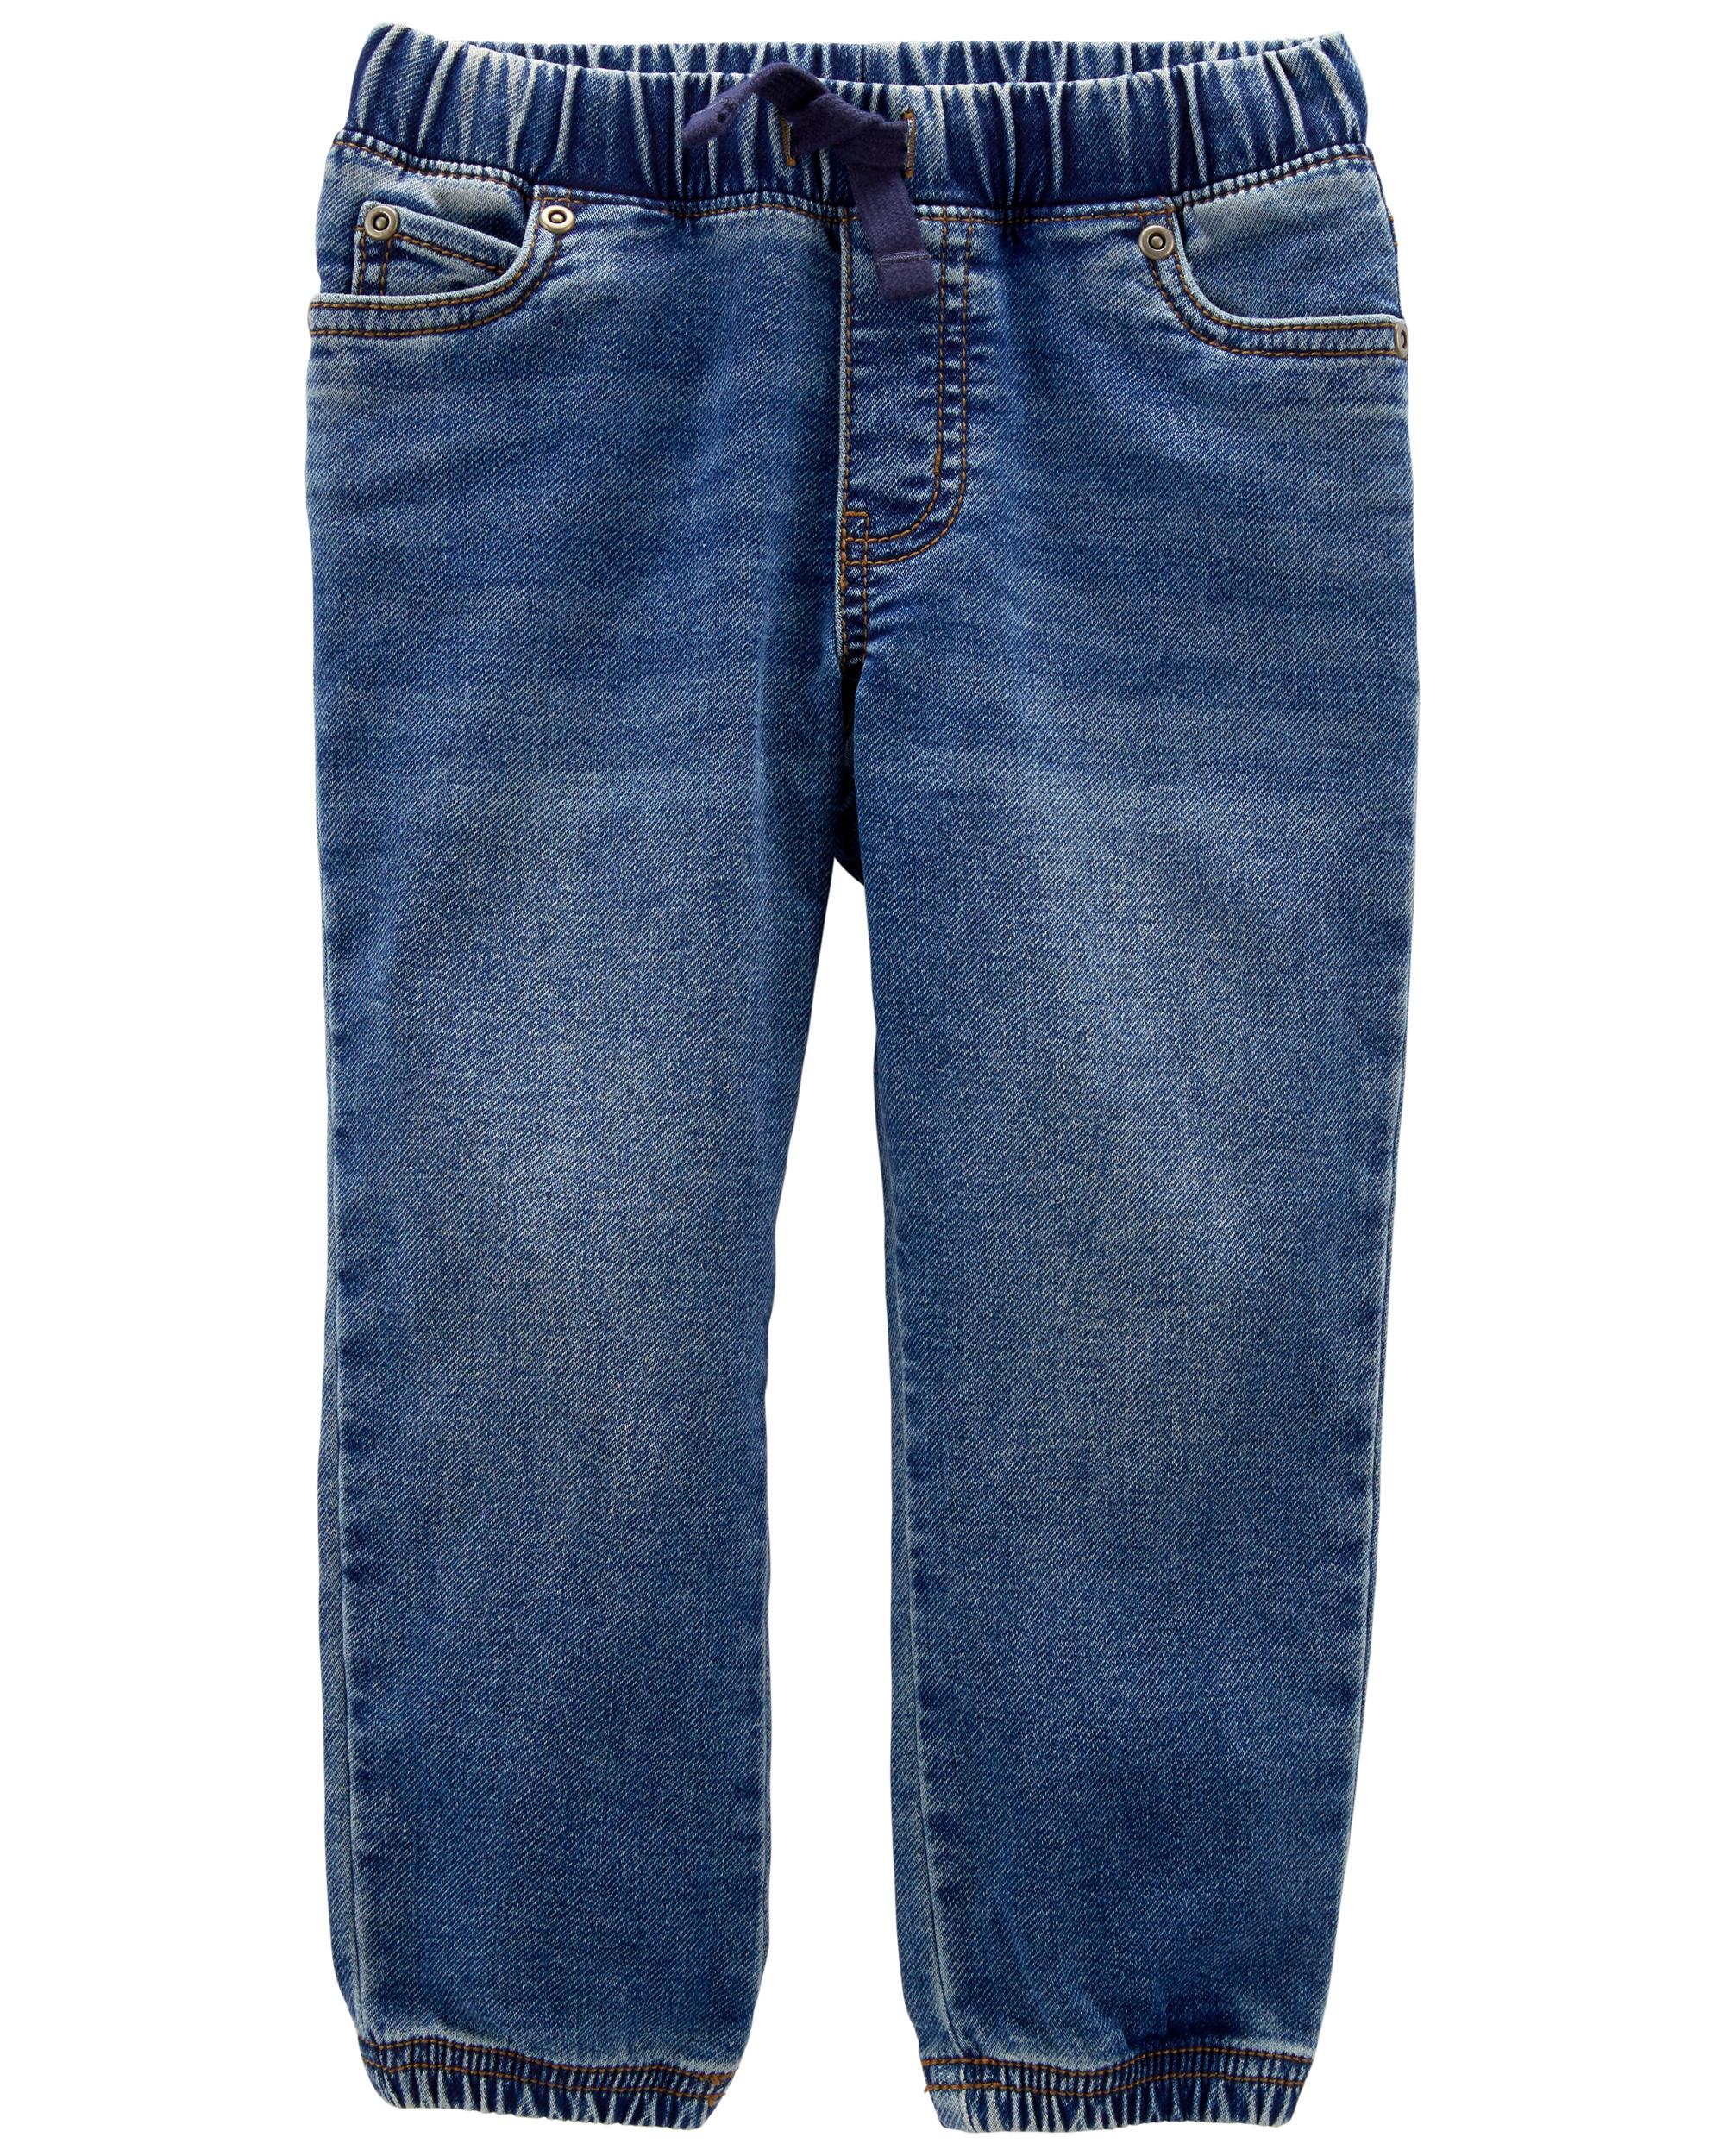 شلوار جینز 35505 سایز 3 ماه تا 6 سال مارک Carters